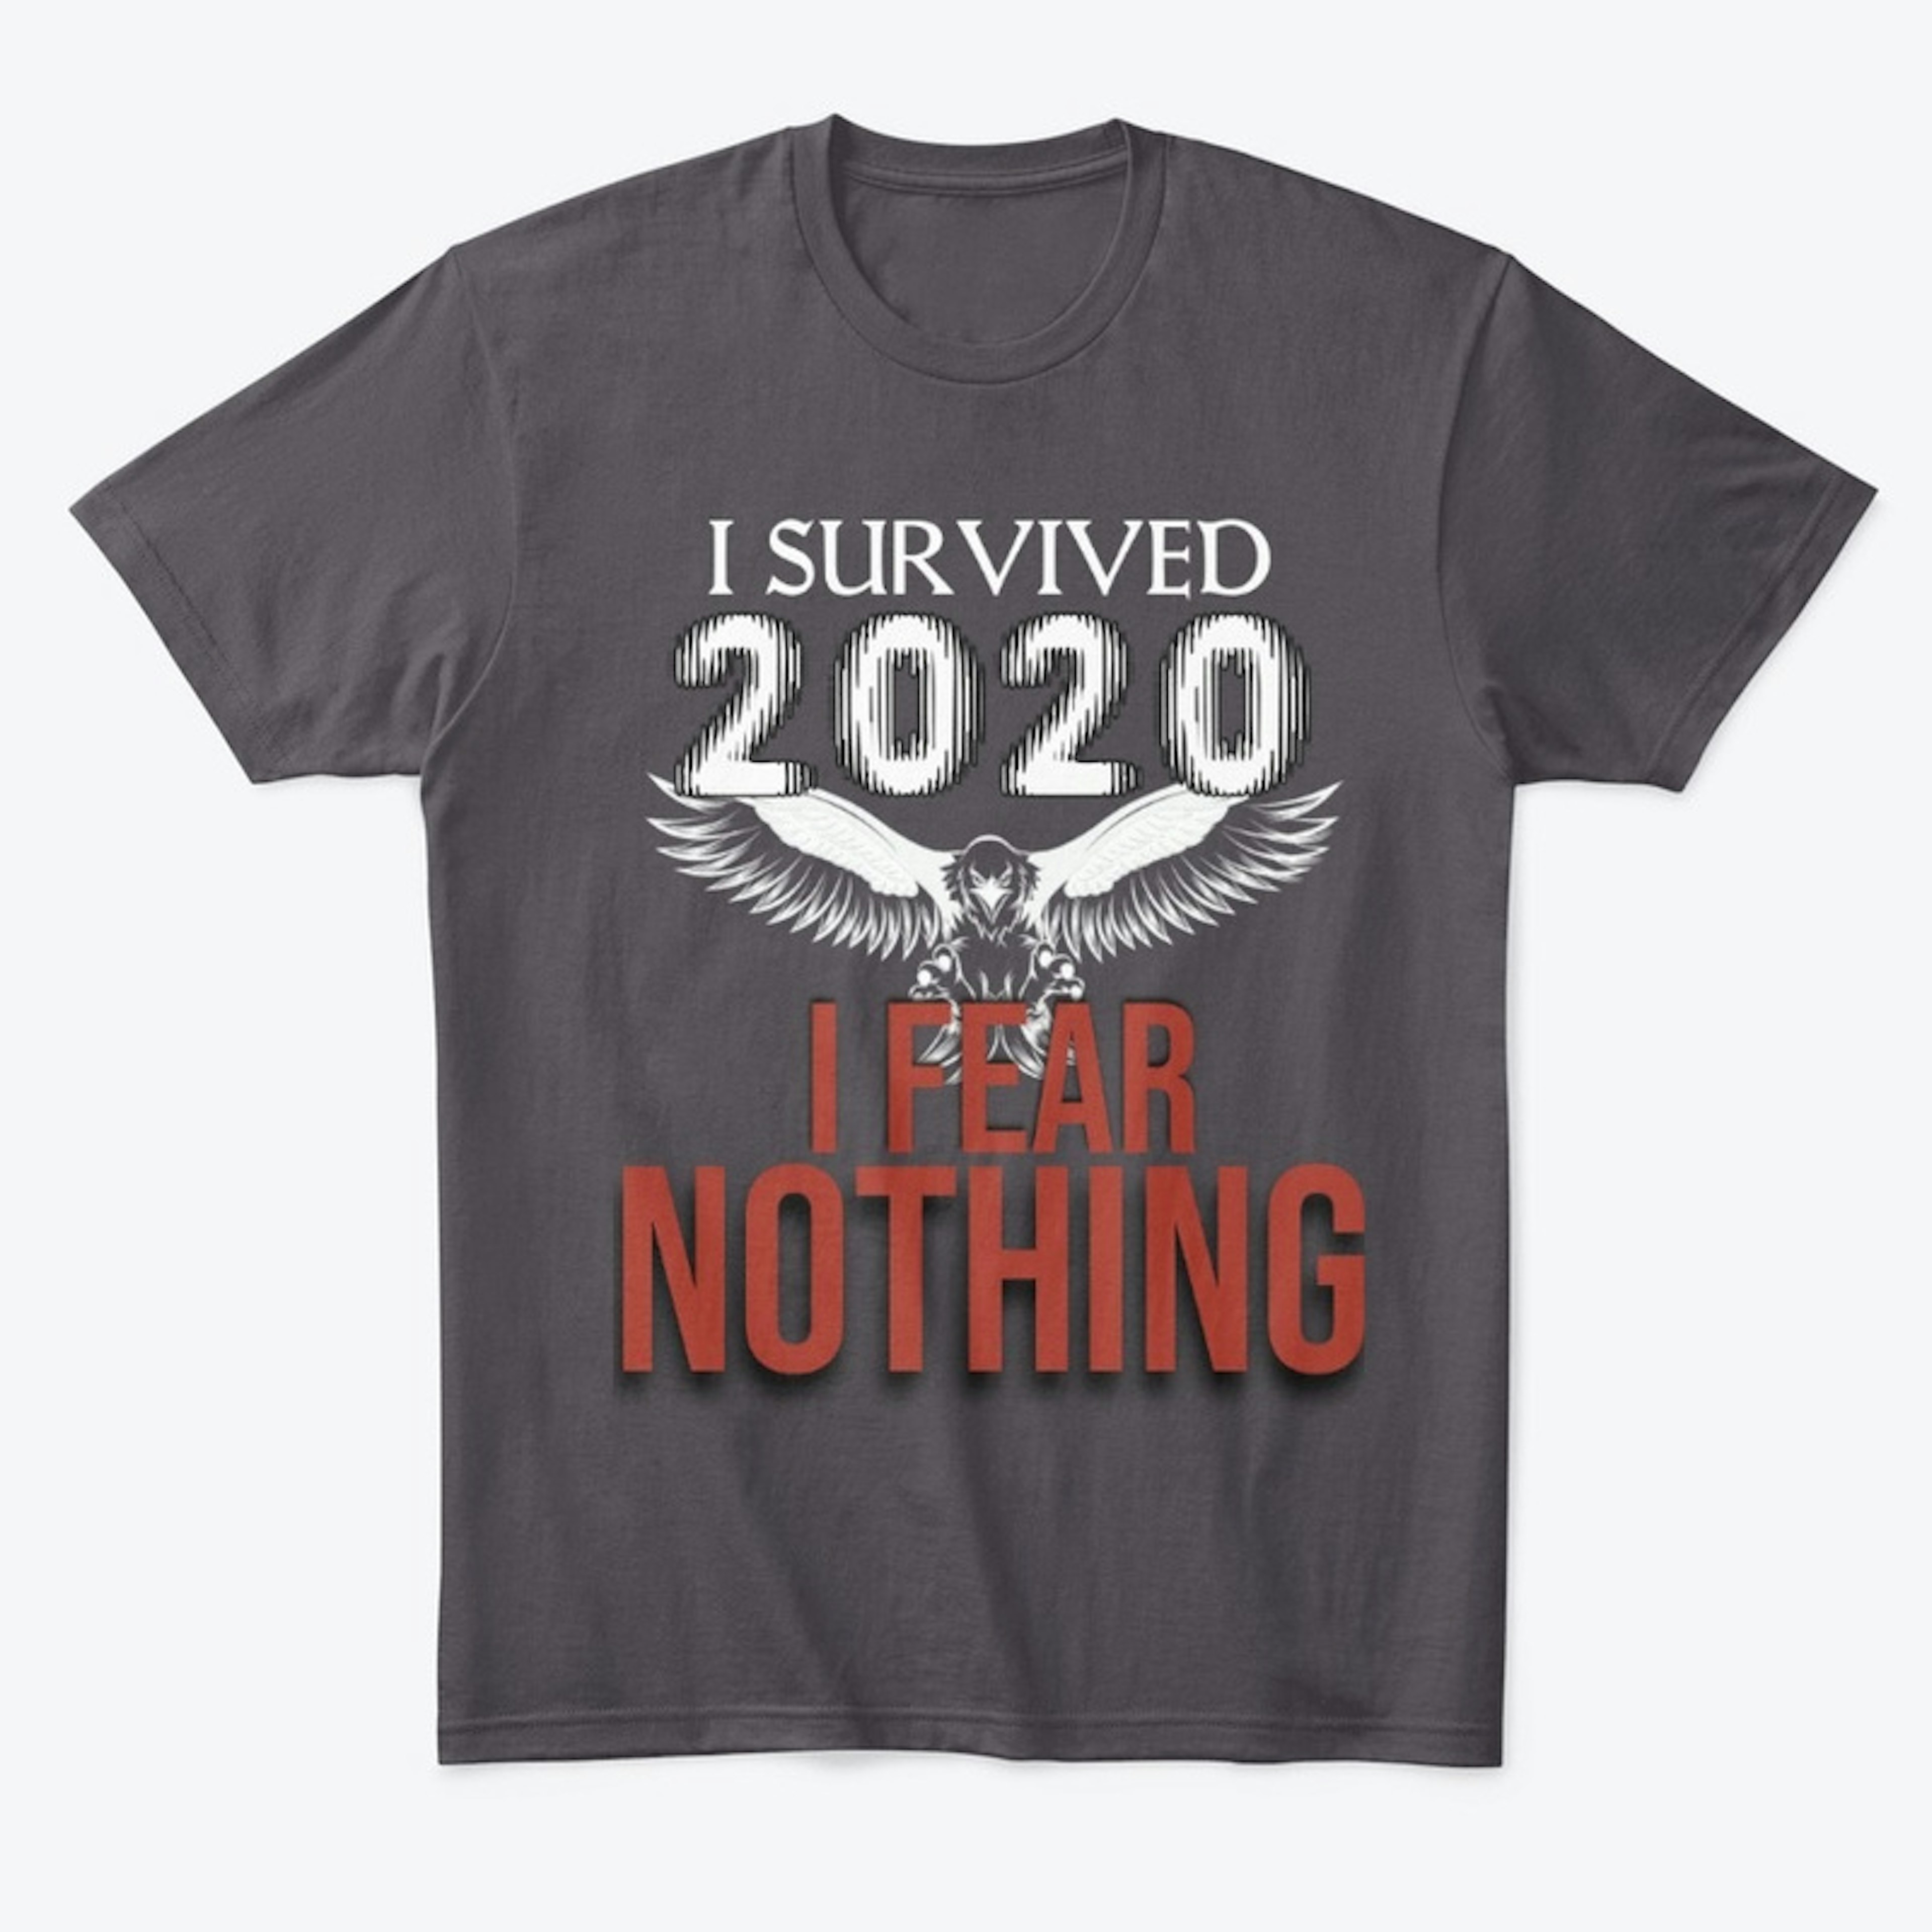 I Fear Nothing 2020